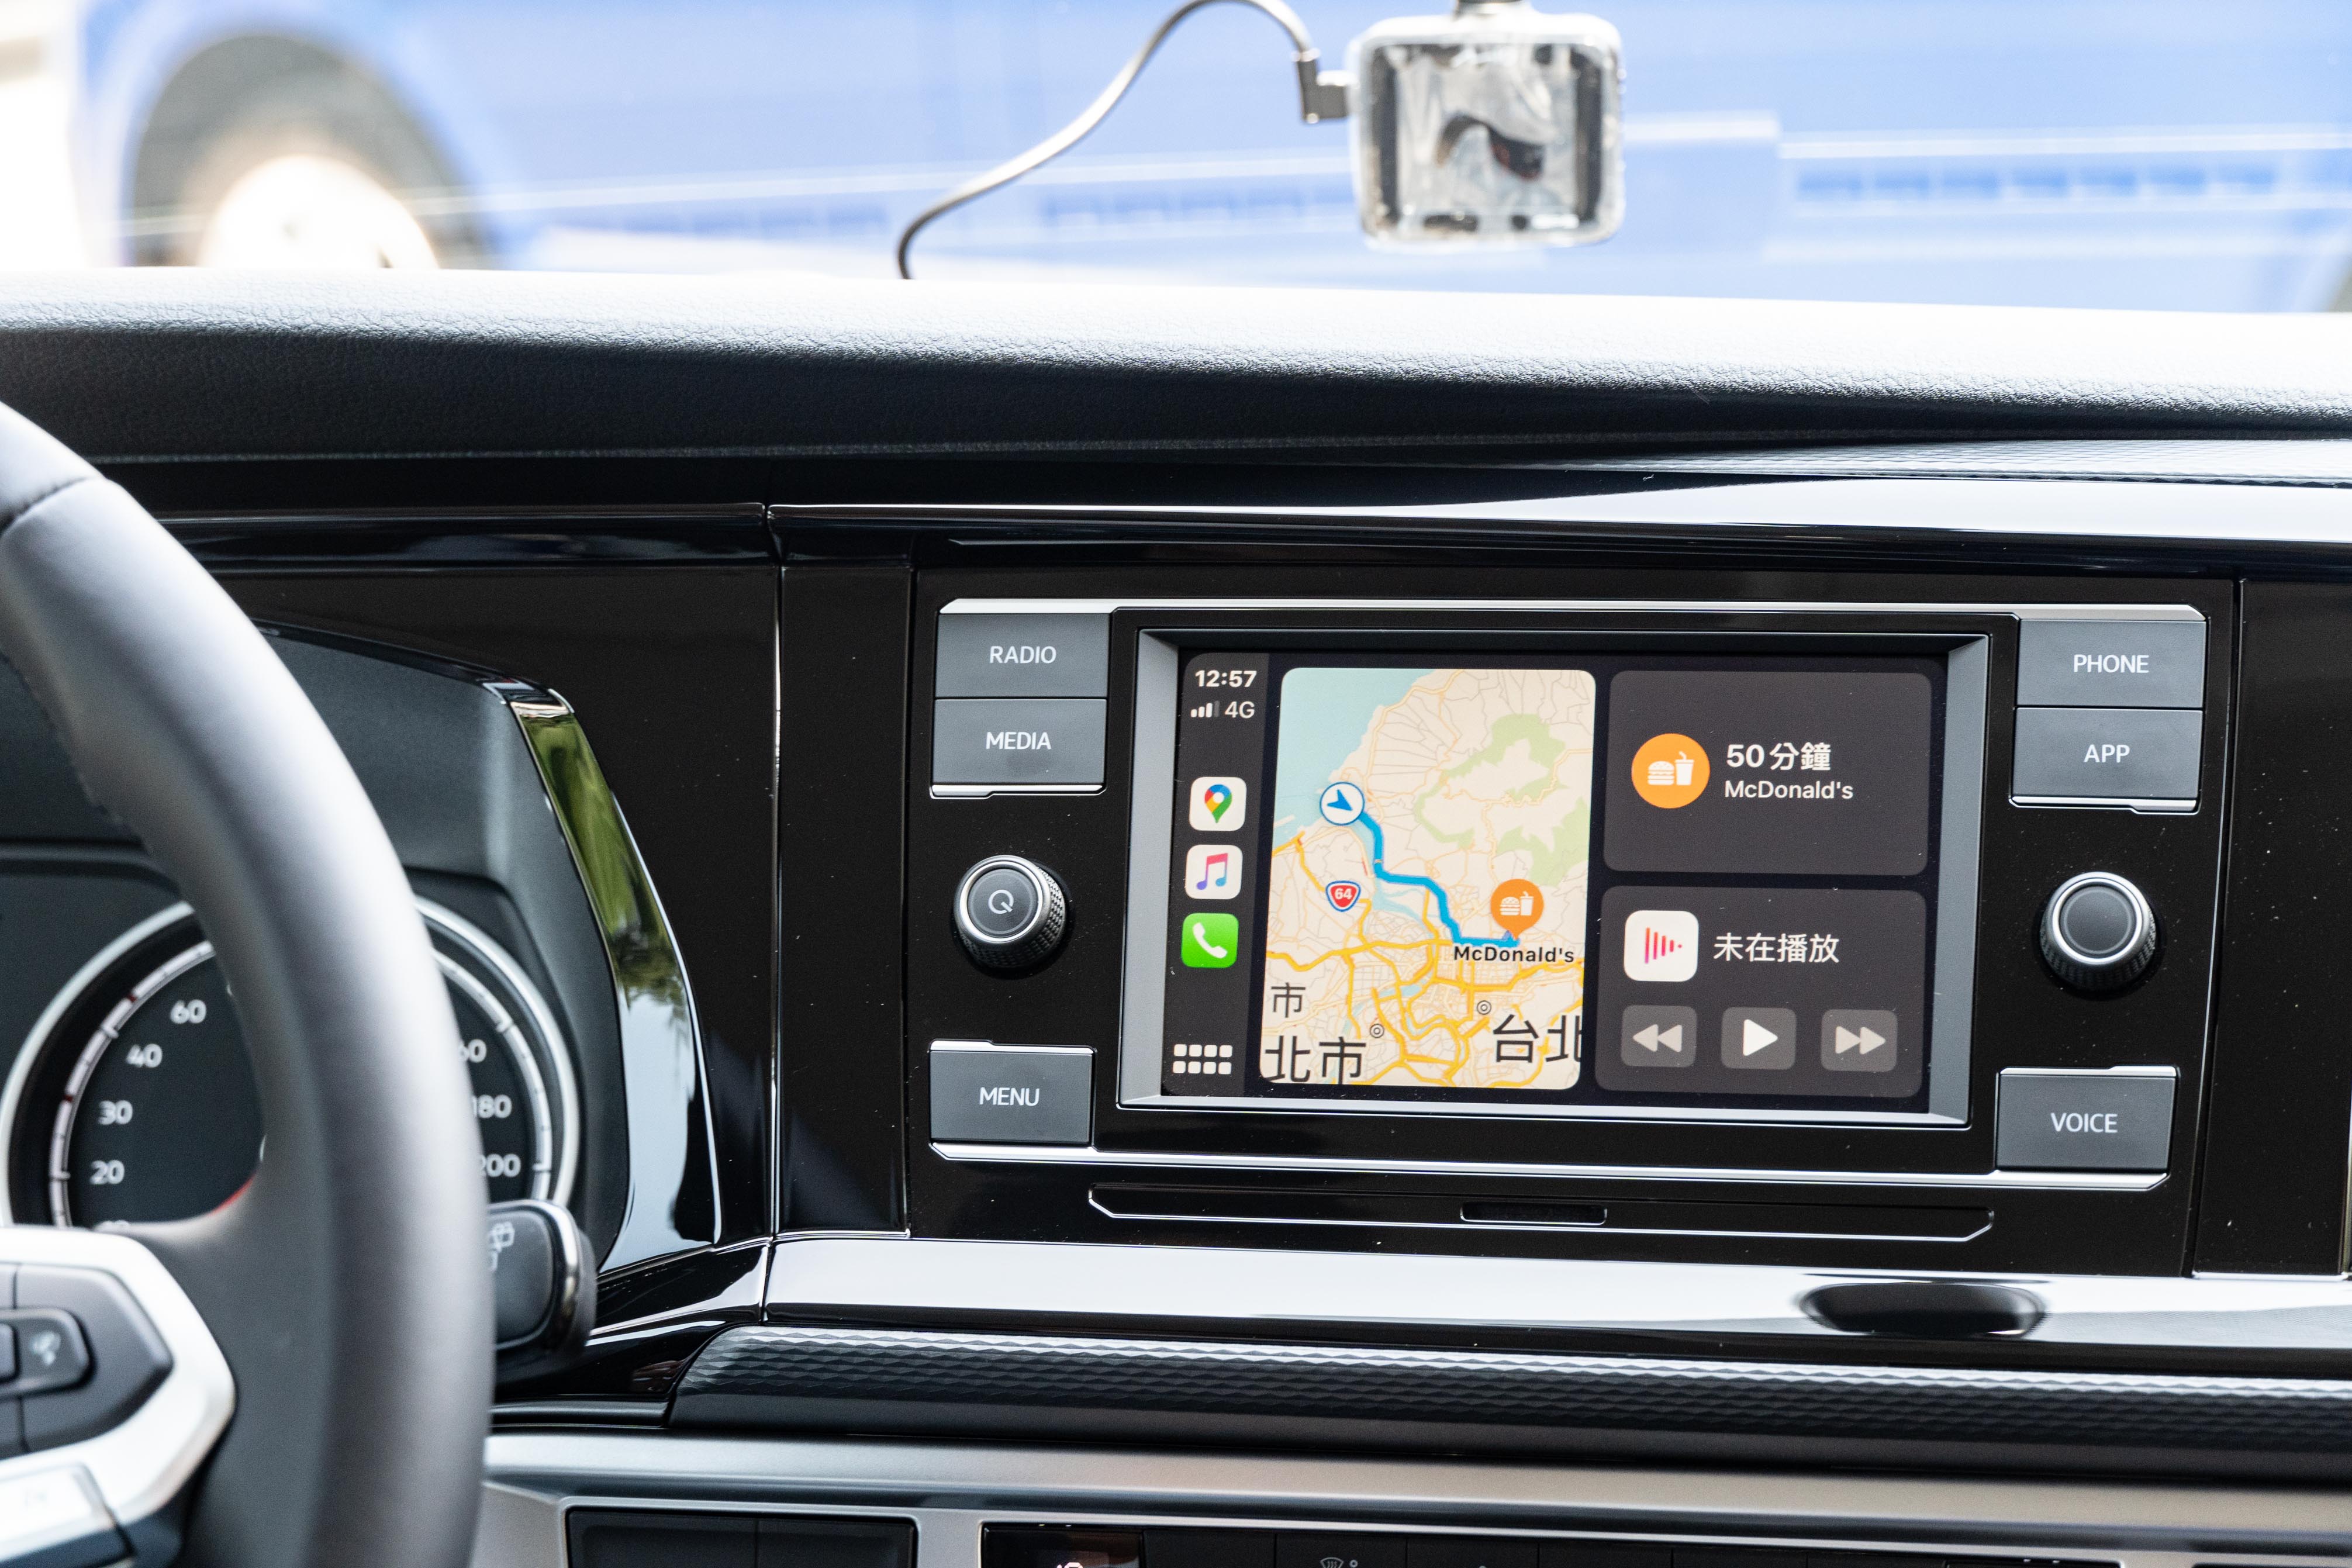 6.5 吋彩色中央觸控螢幕支援 Apple CarPlay 和 Android Auto。